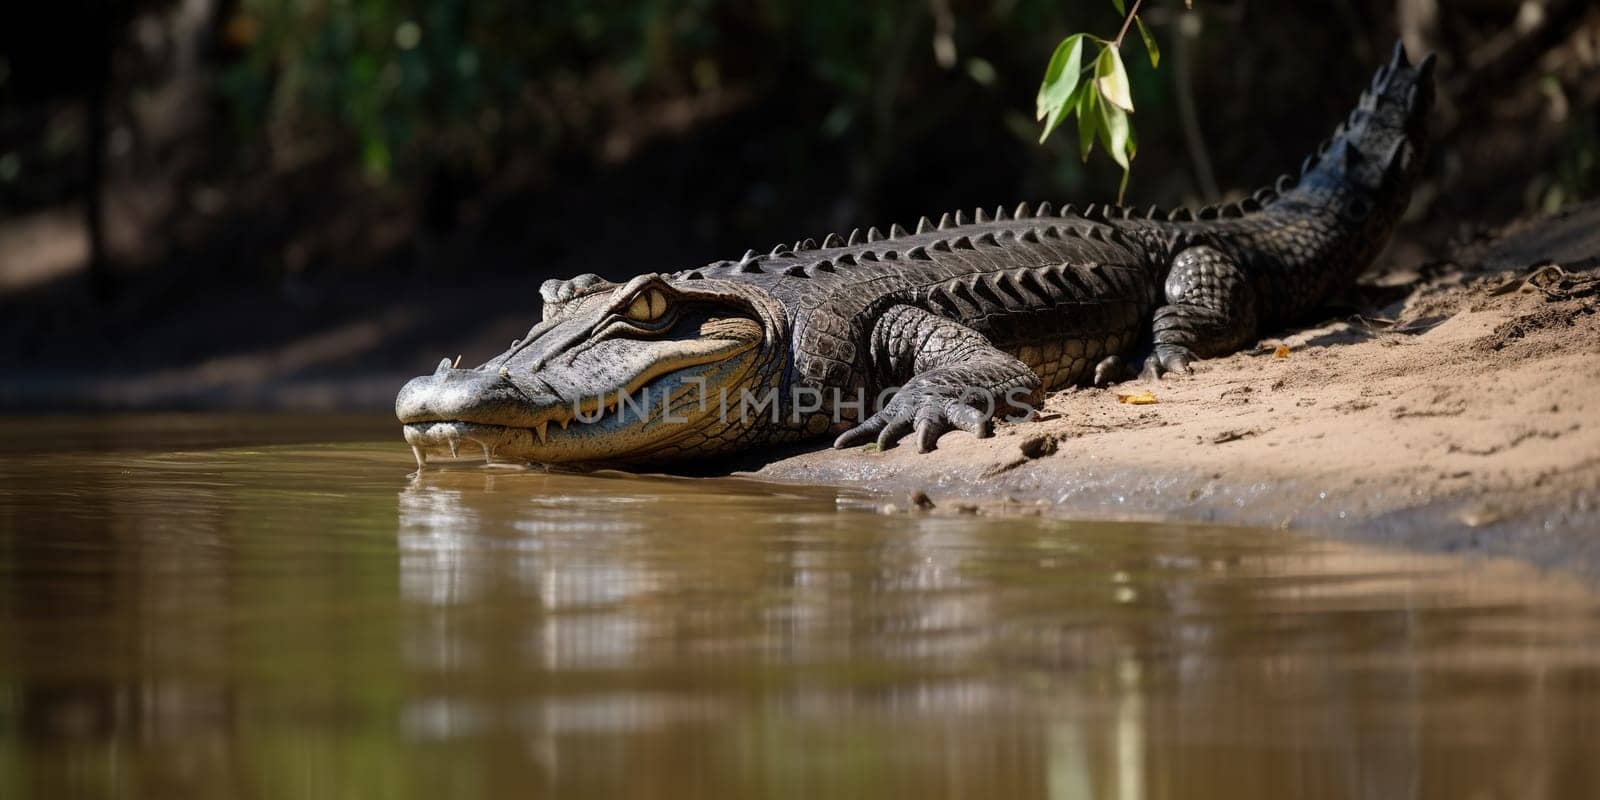 Сrocodile walking into water on the shore by tan4ikk1